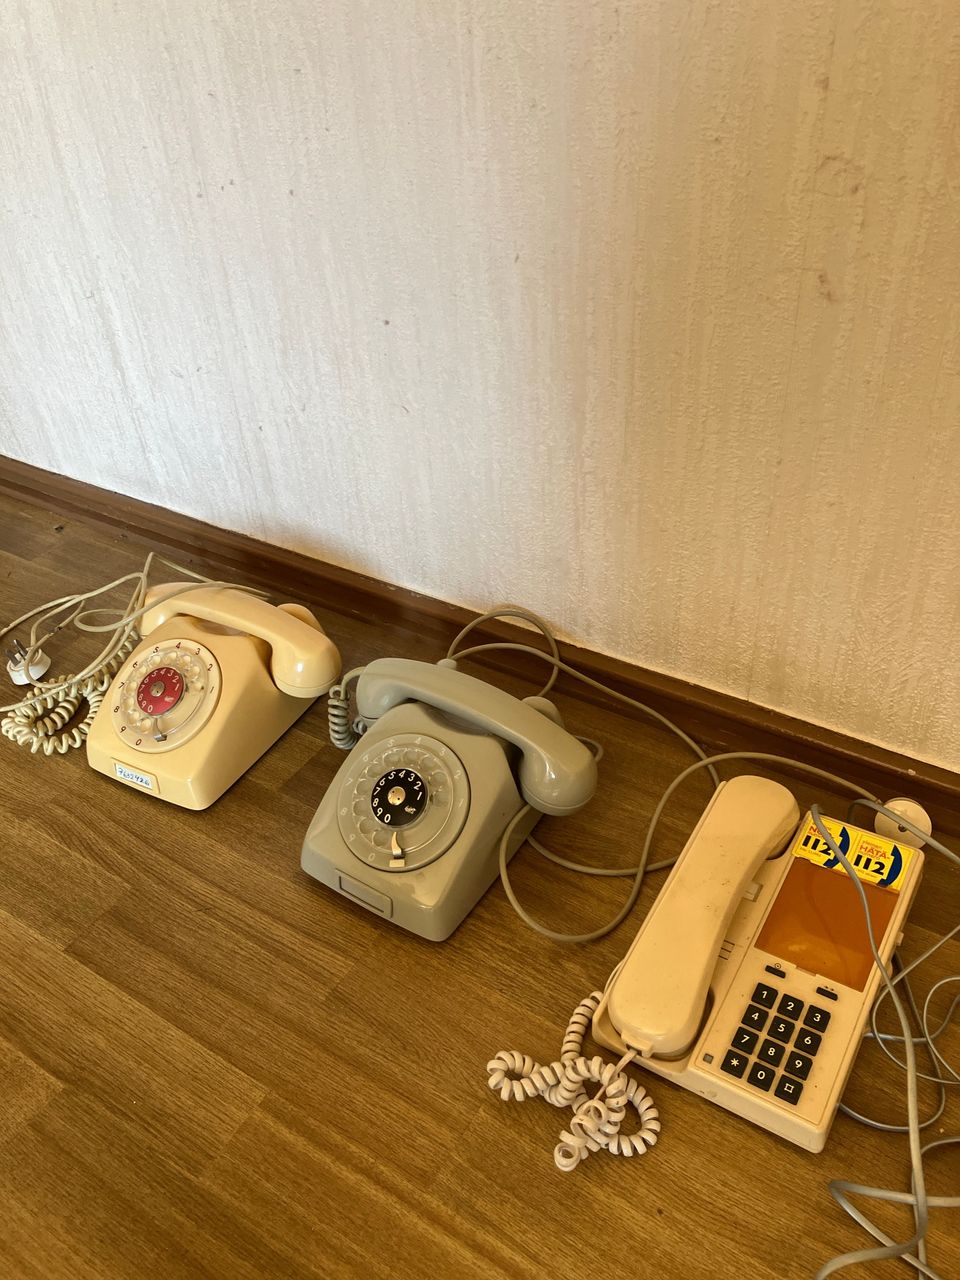 Nostalgiset puhelimet